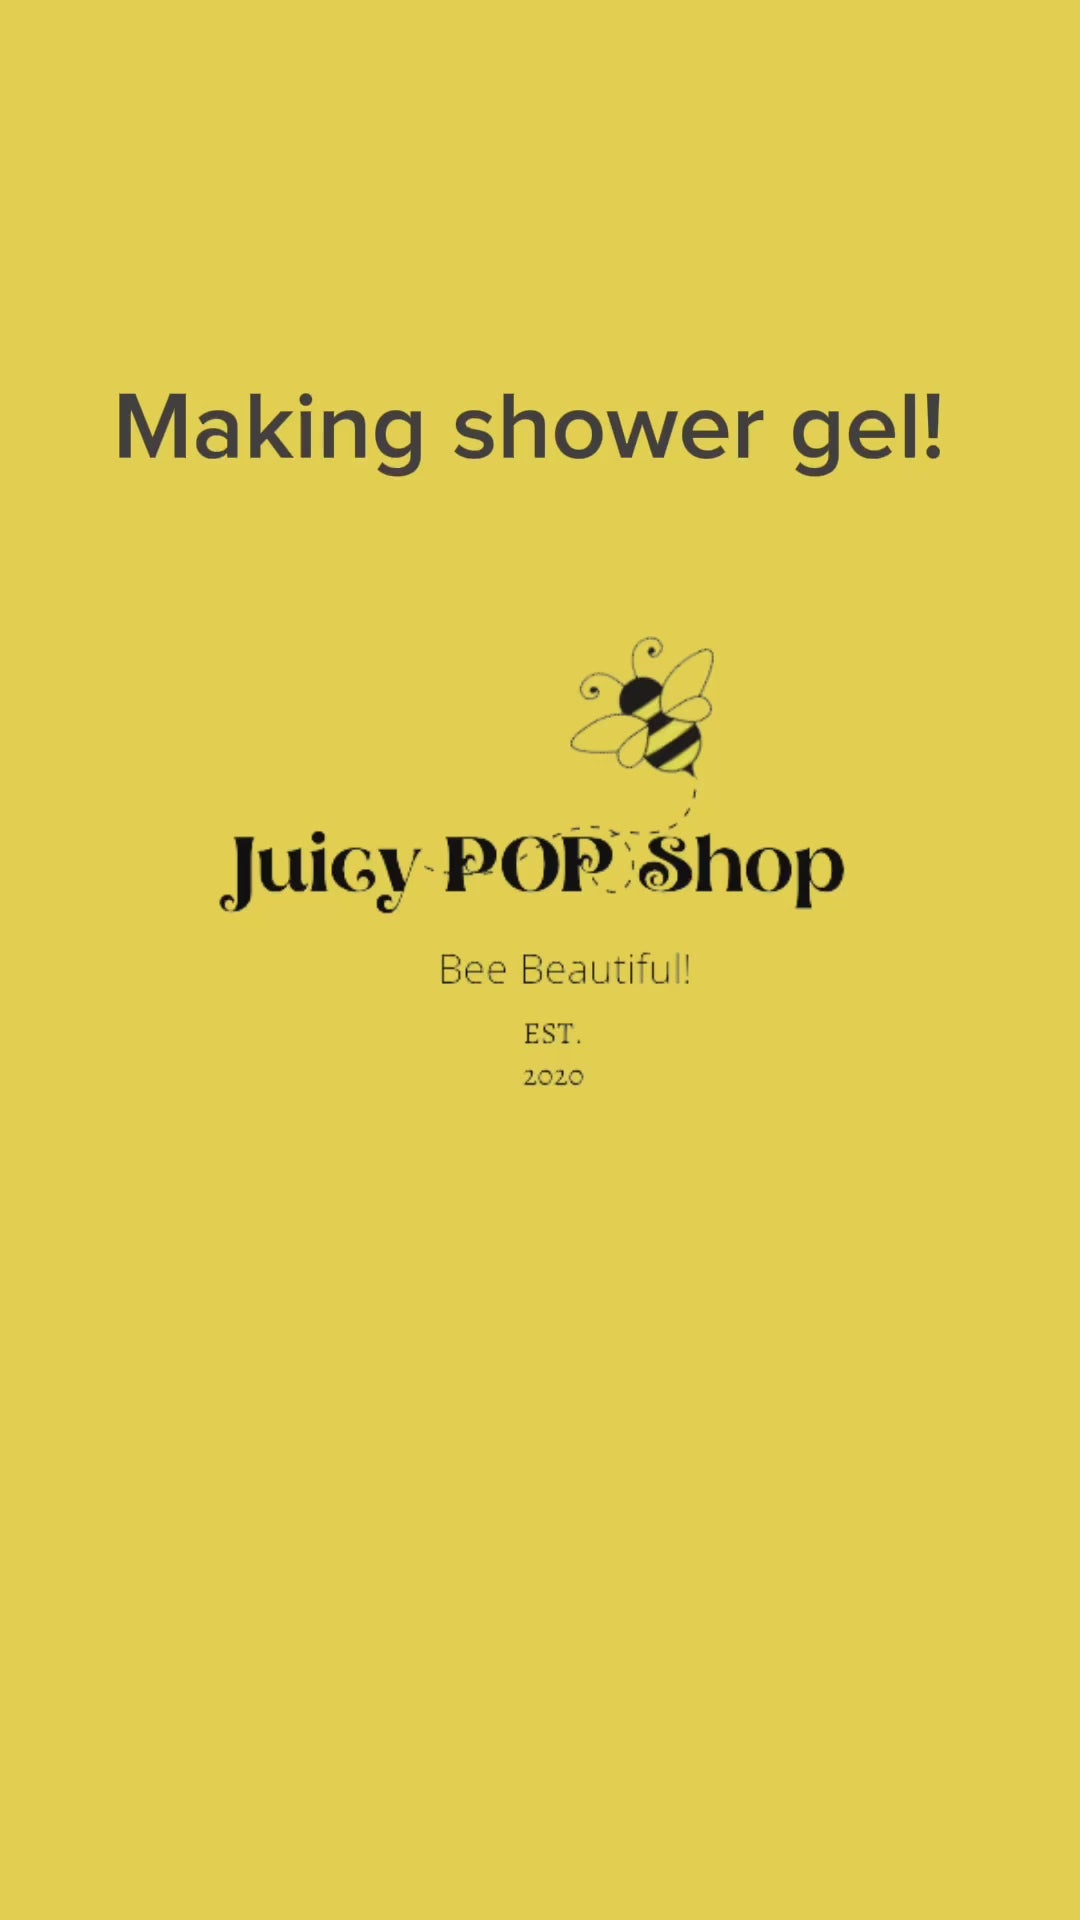 Load video: Behind the scenes with Juicy POP Shop